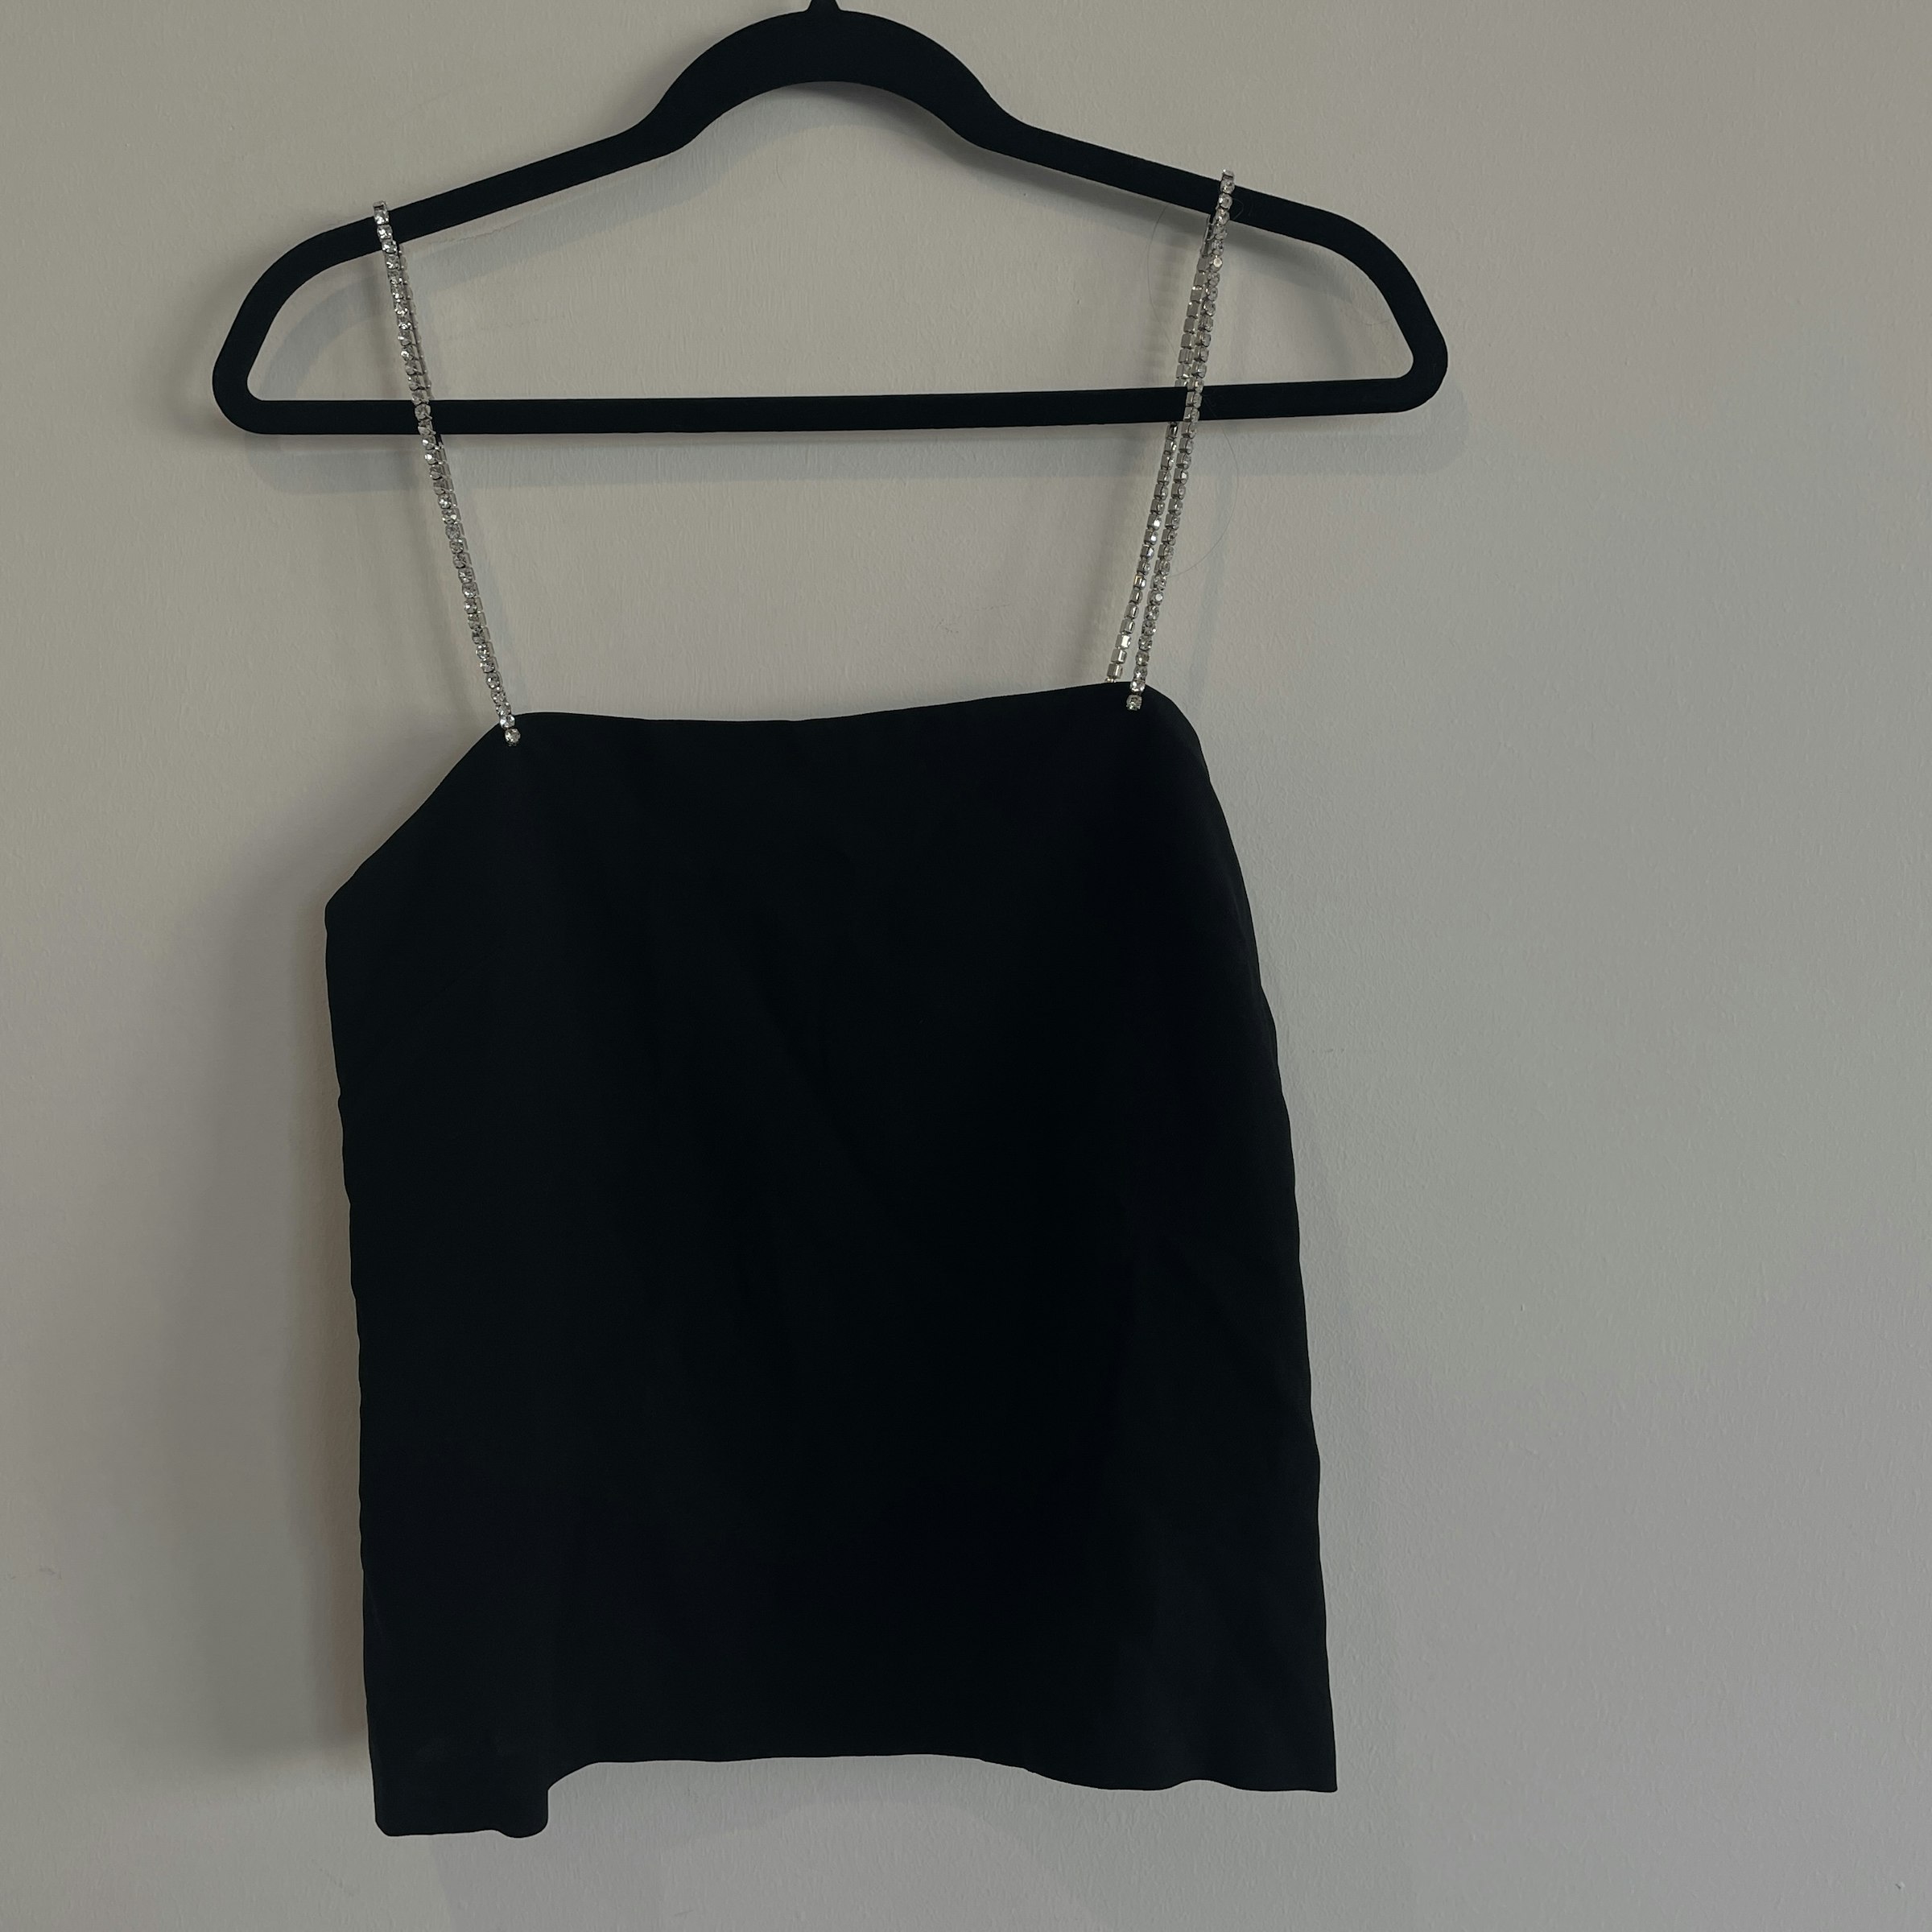 confiar Marina Surrey Blusa negra con tirantes de cadena de cristal Zara POPUP - $187.50 | Gloset